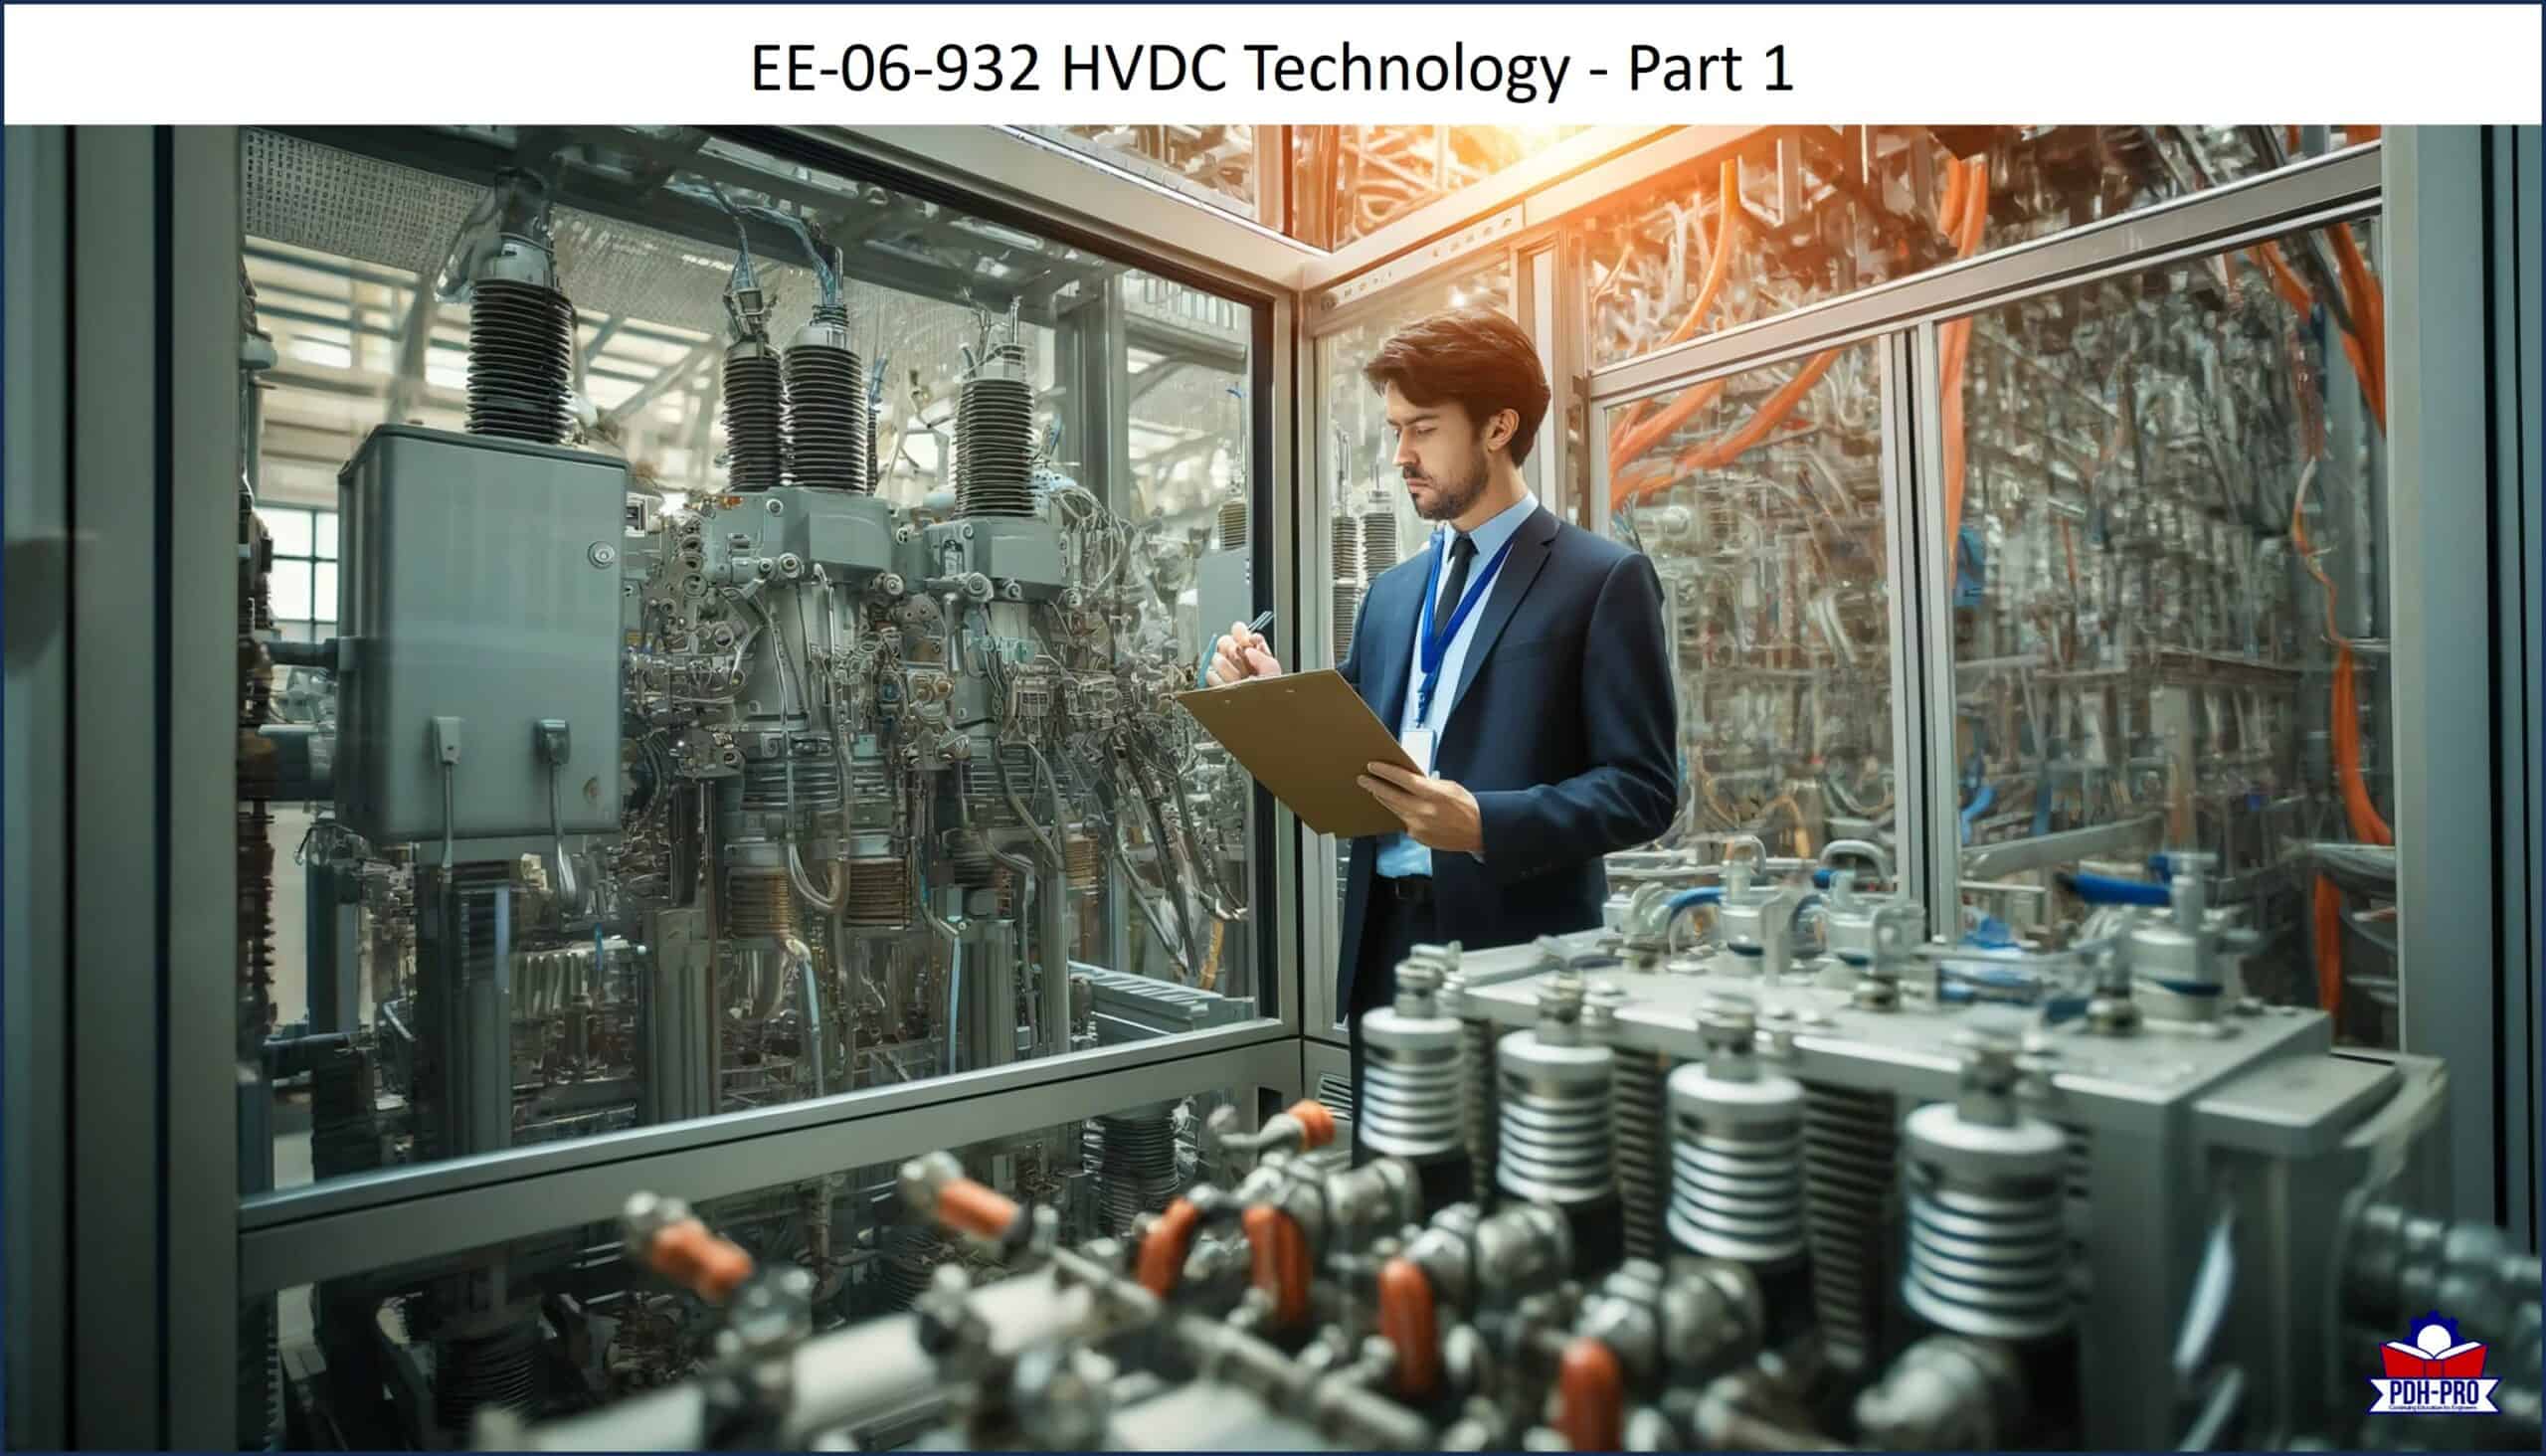 HVDC Technology - Part 1